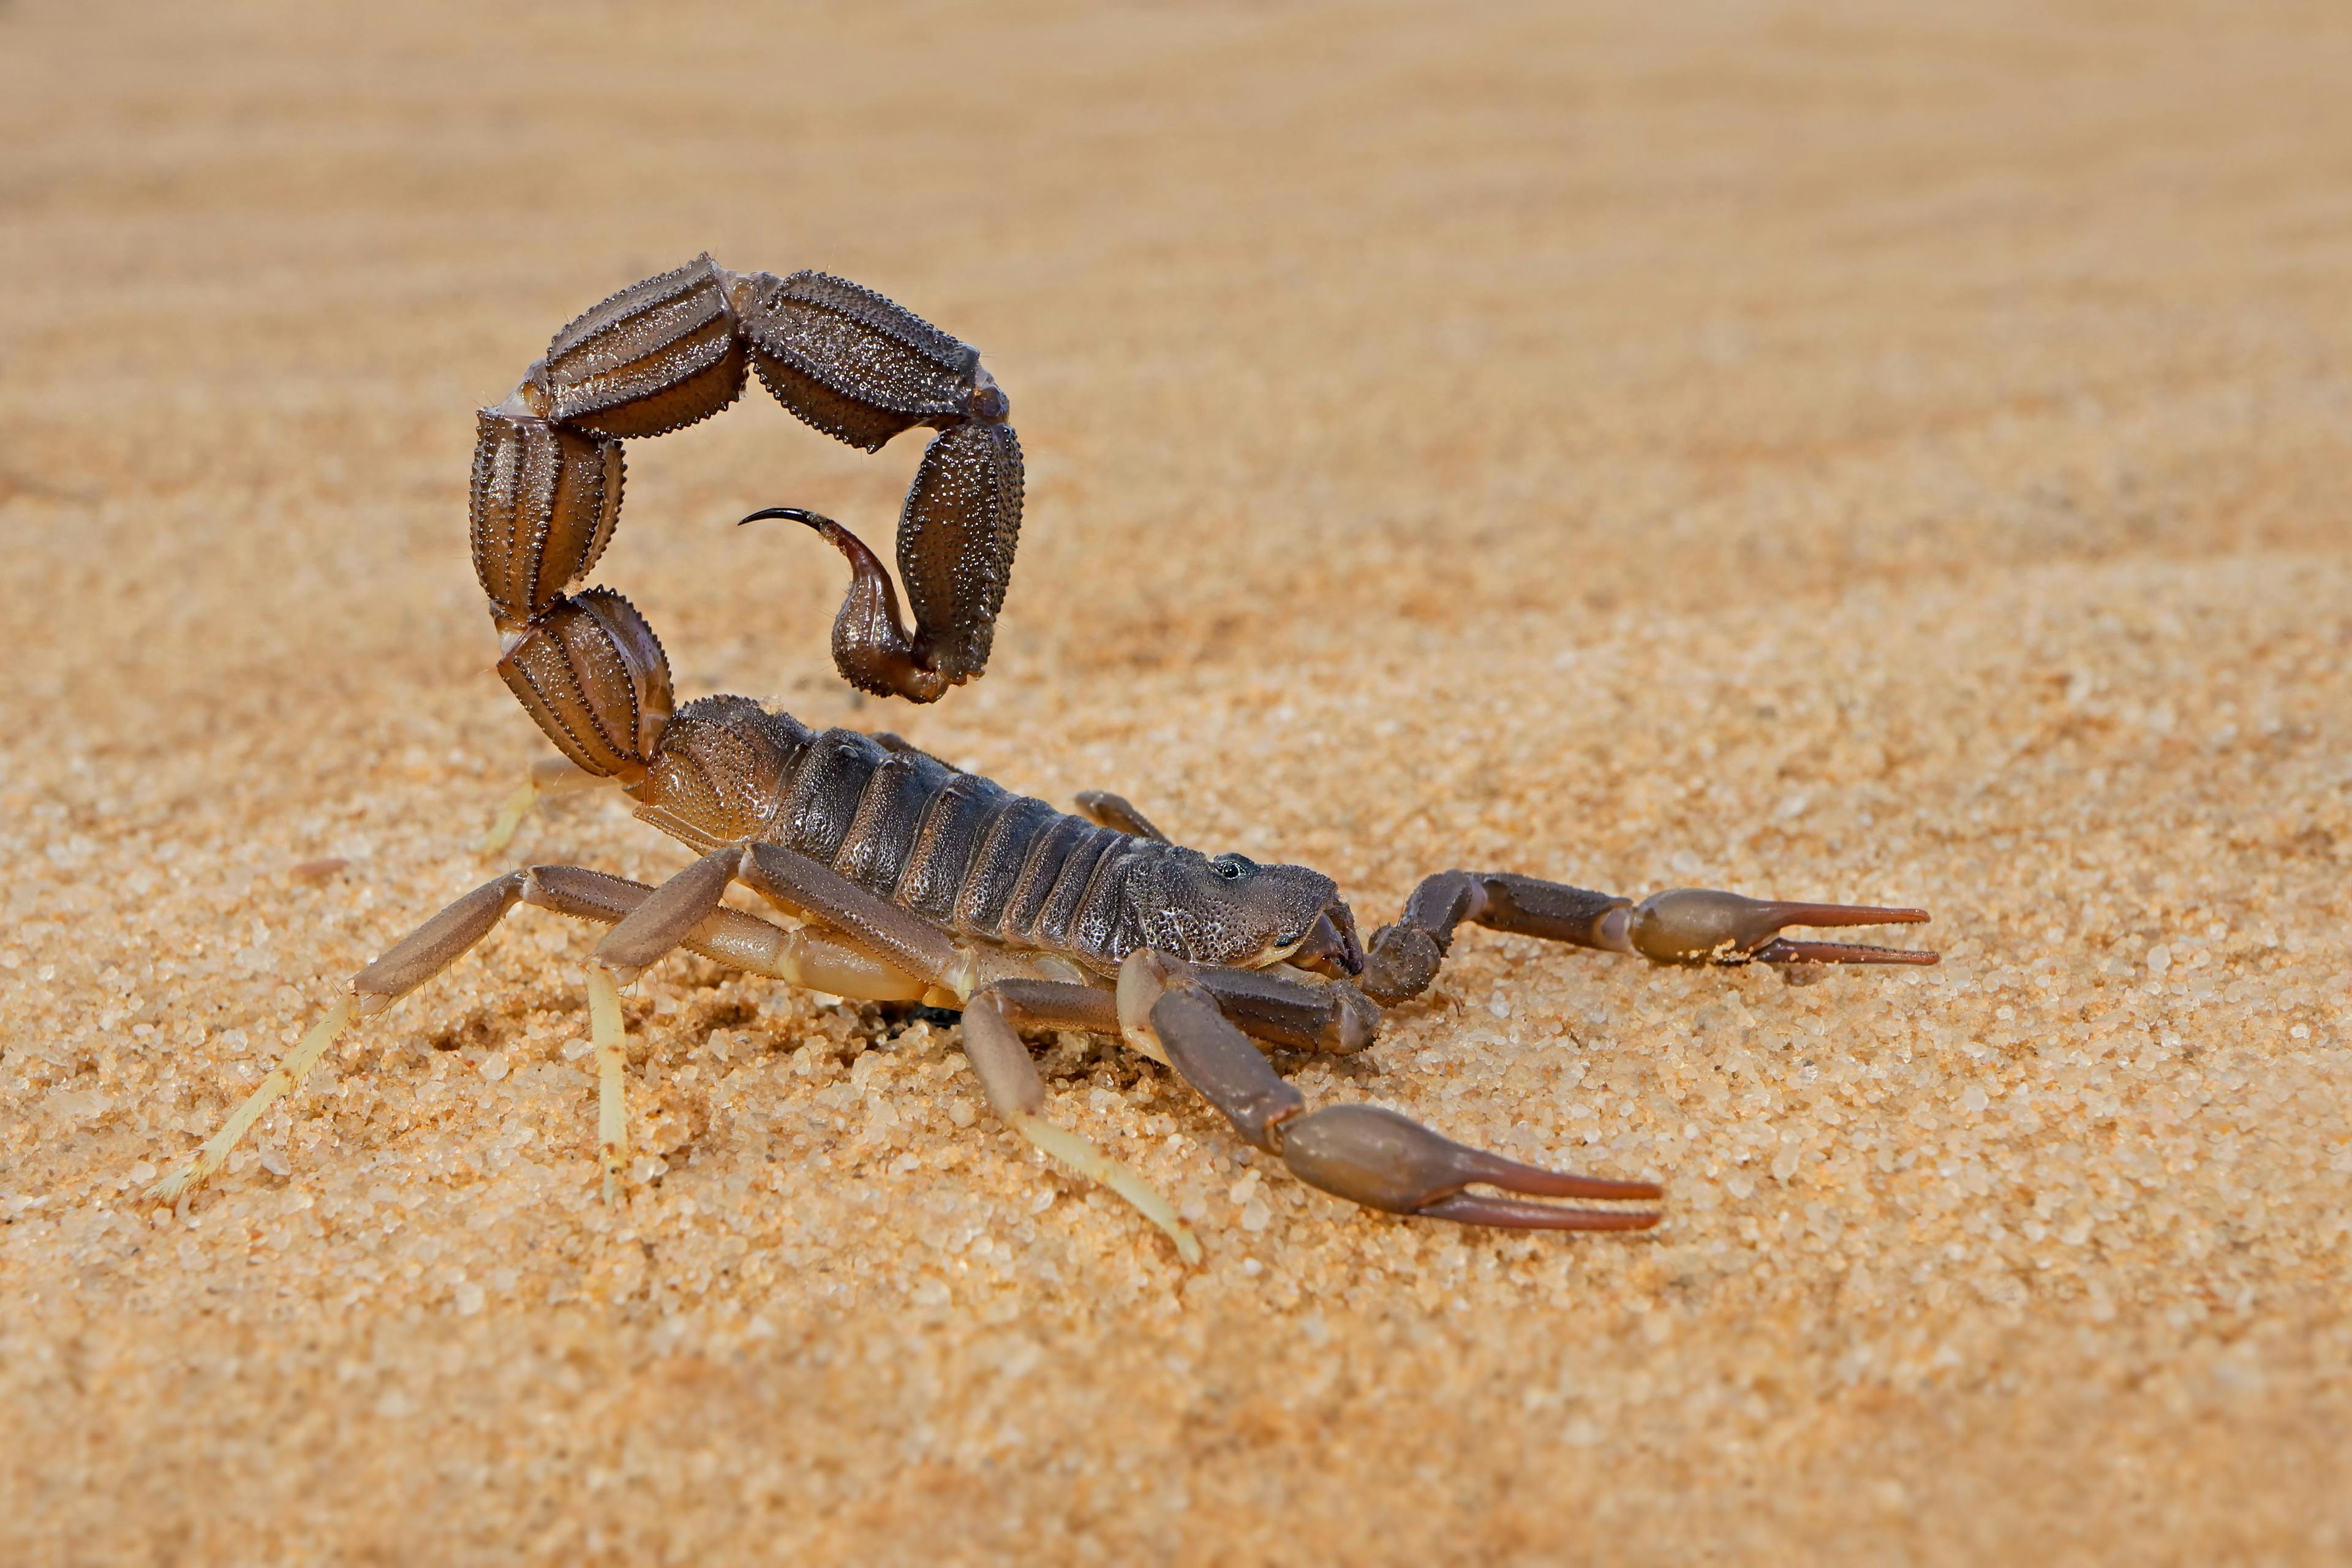 Granulated thick-tailed scorpion (Parabuthus granulatus), Kalahari desert, South Africa. | Image Credit: © EcoView - stock.adobe.com